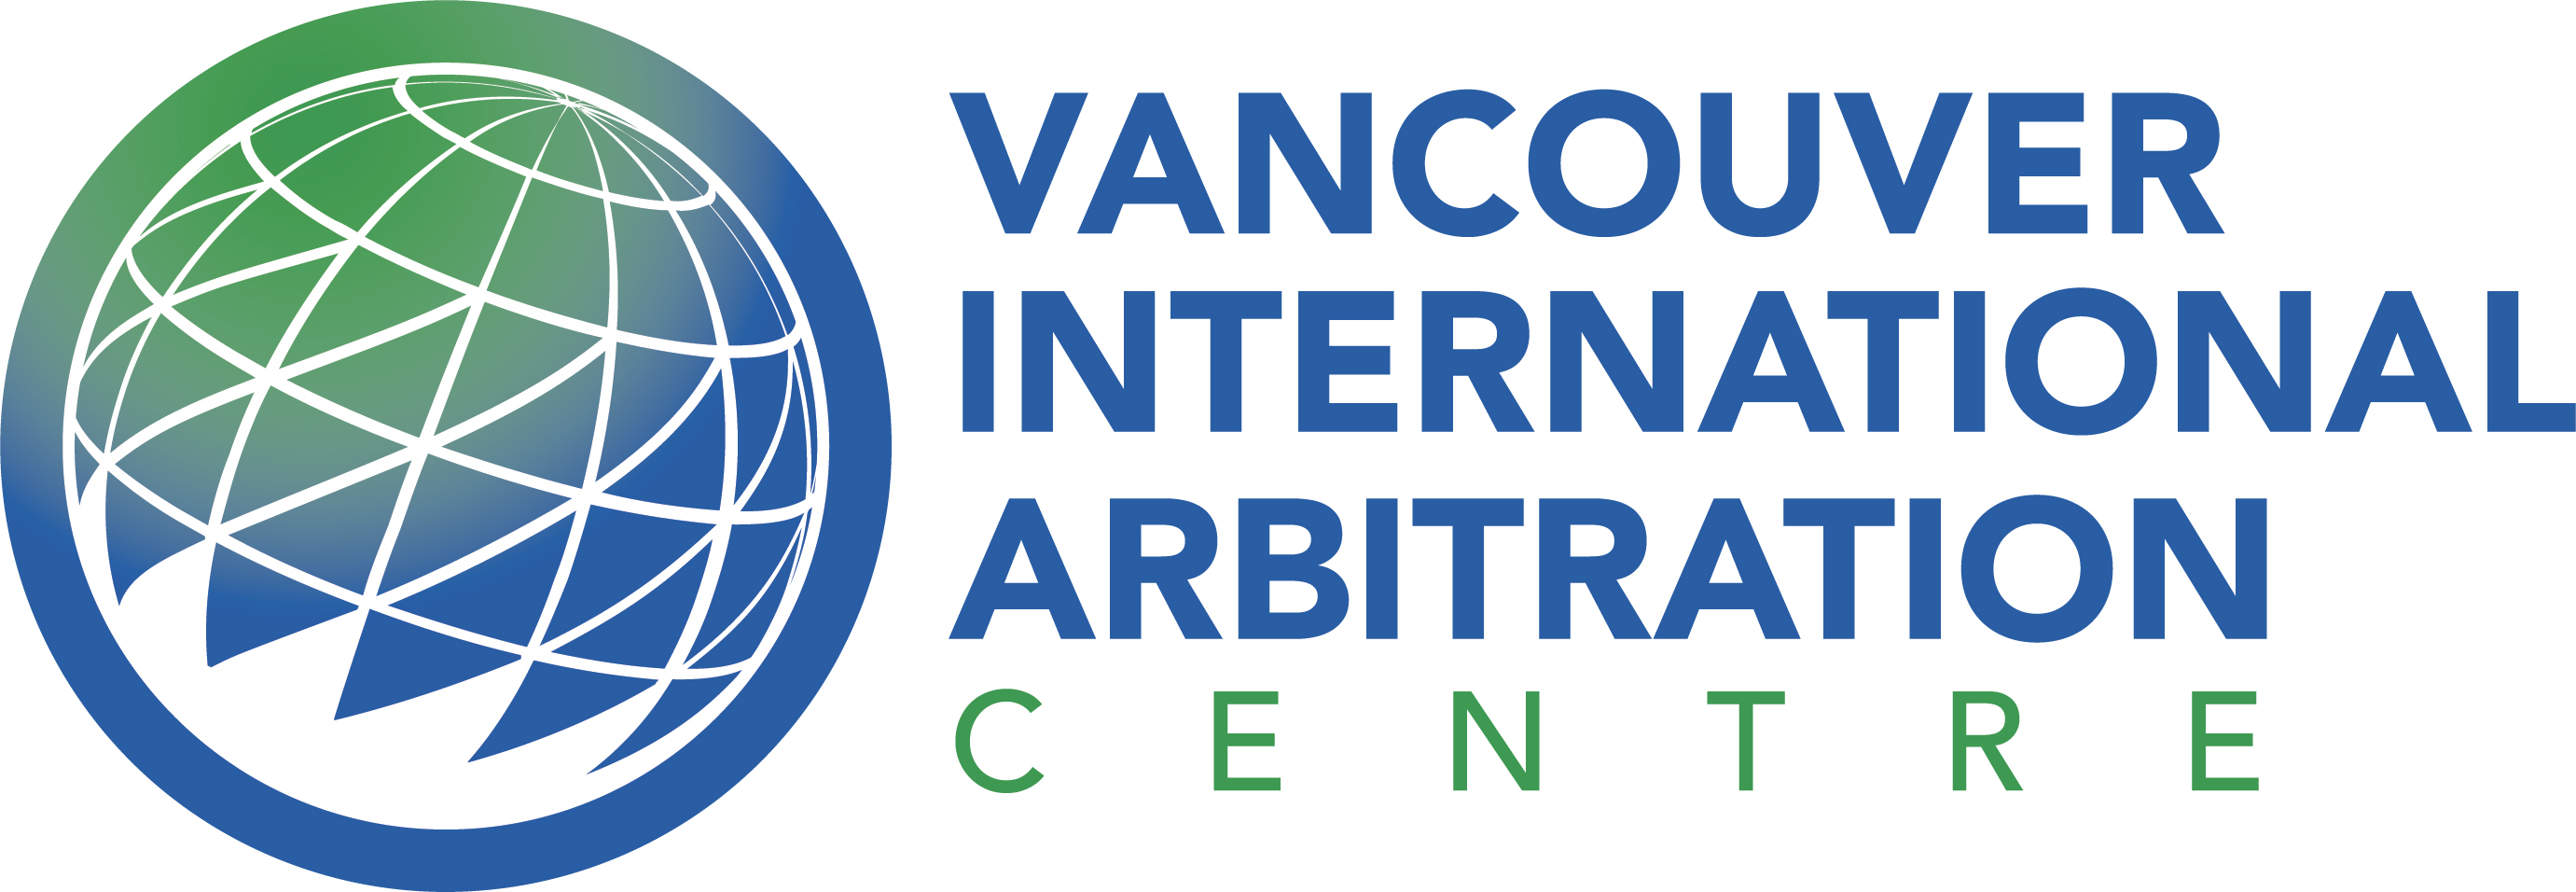 Vancouver International Arbitration Centre